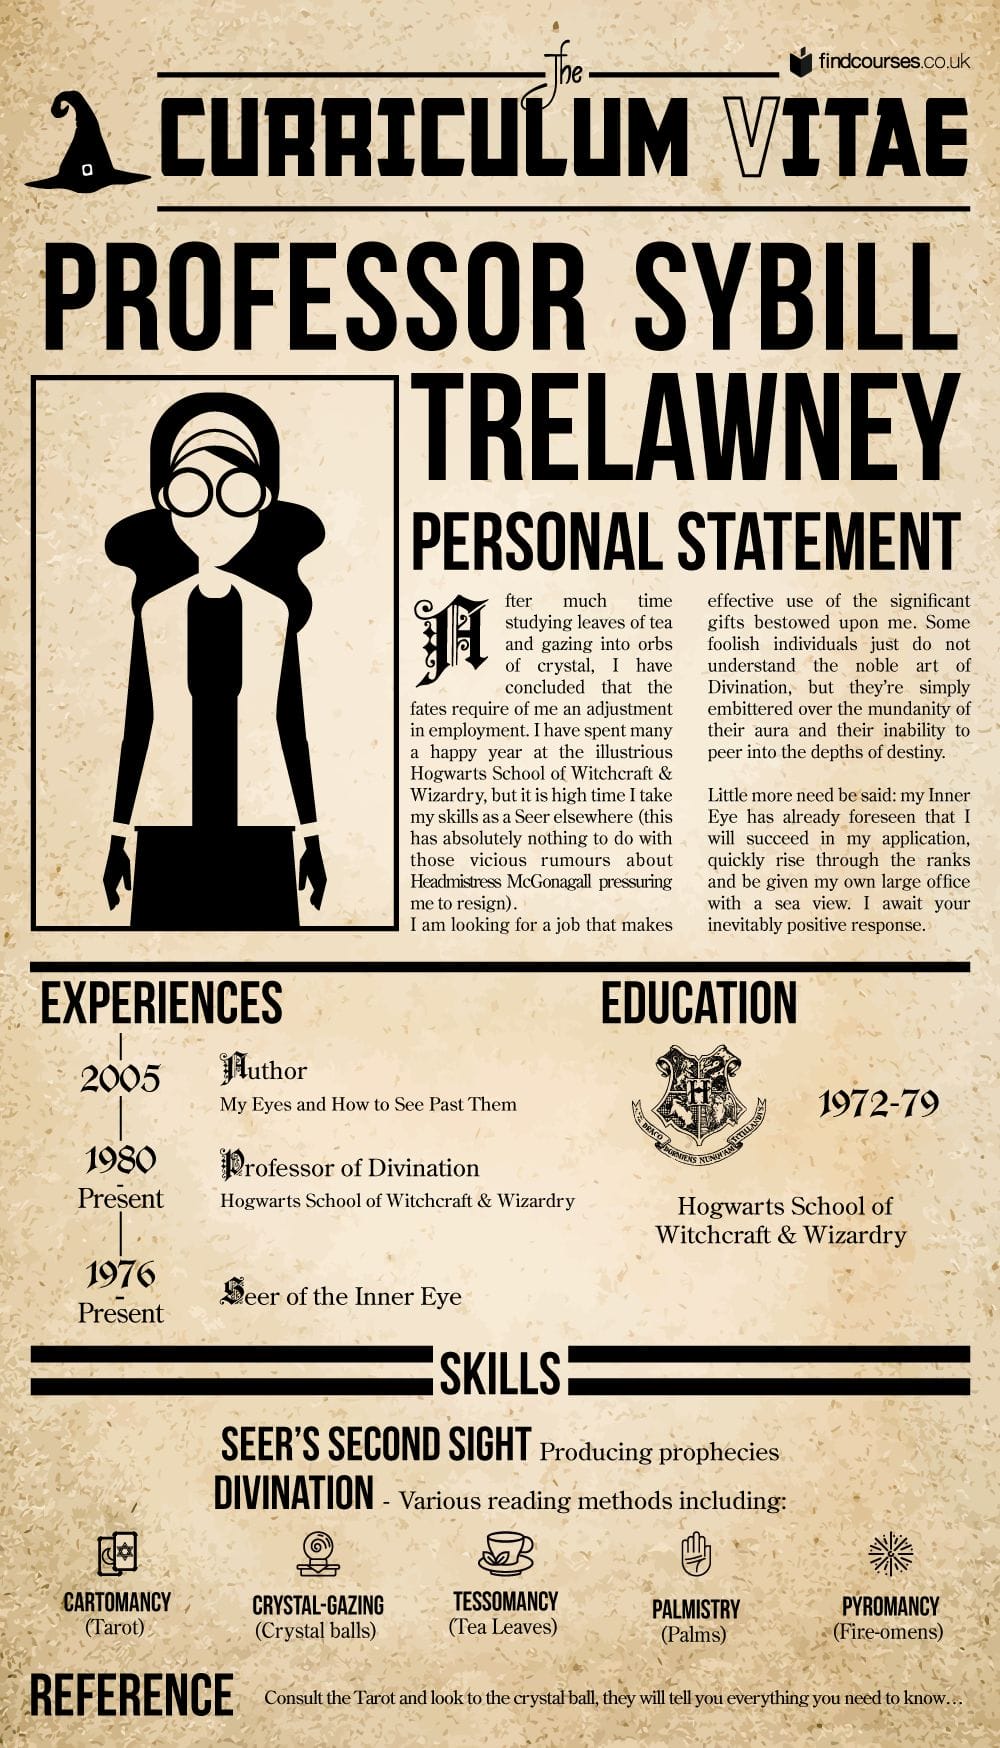 Sybill trelawney's resume